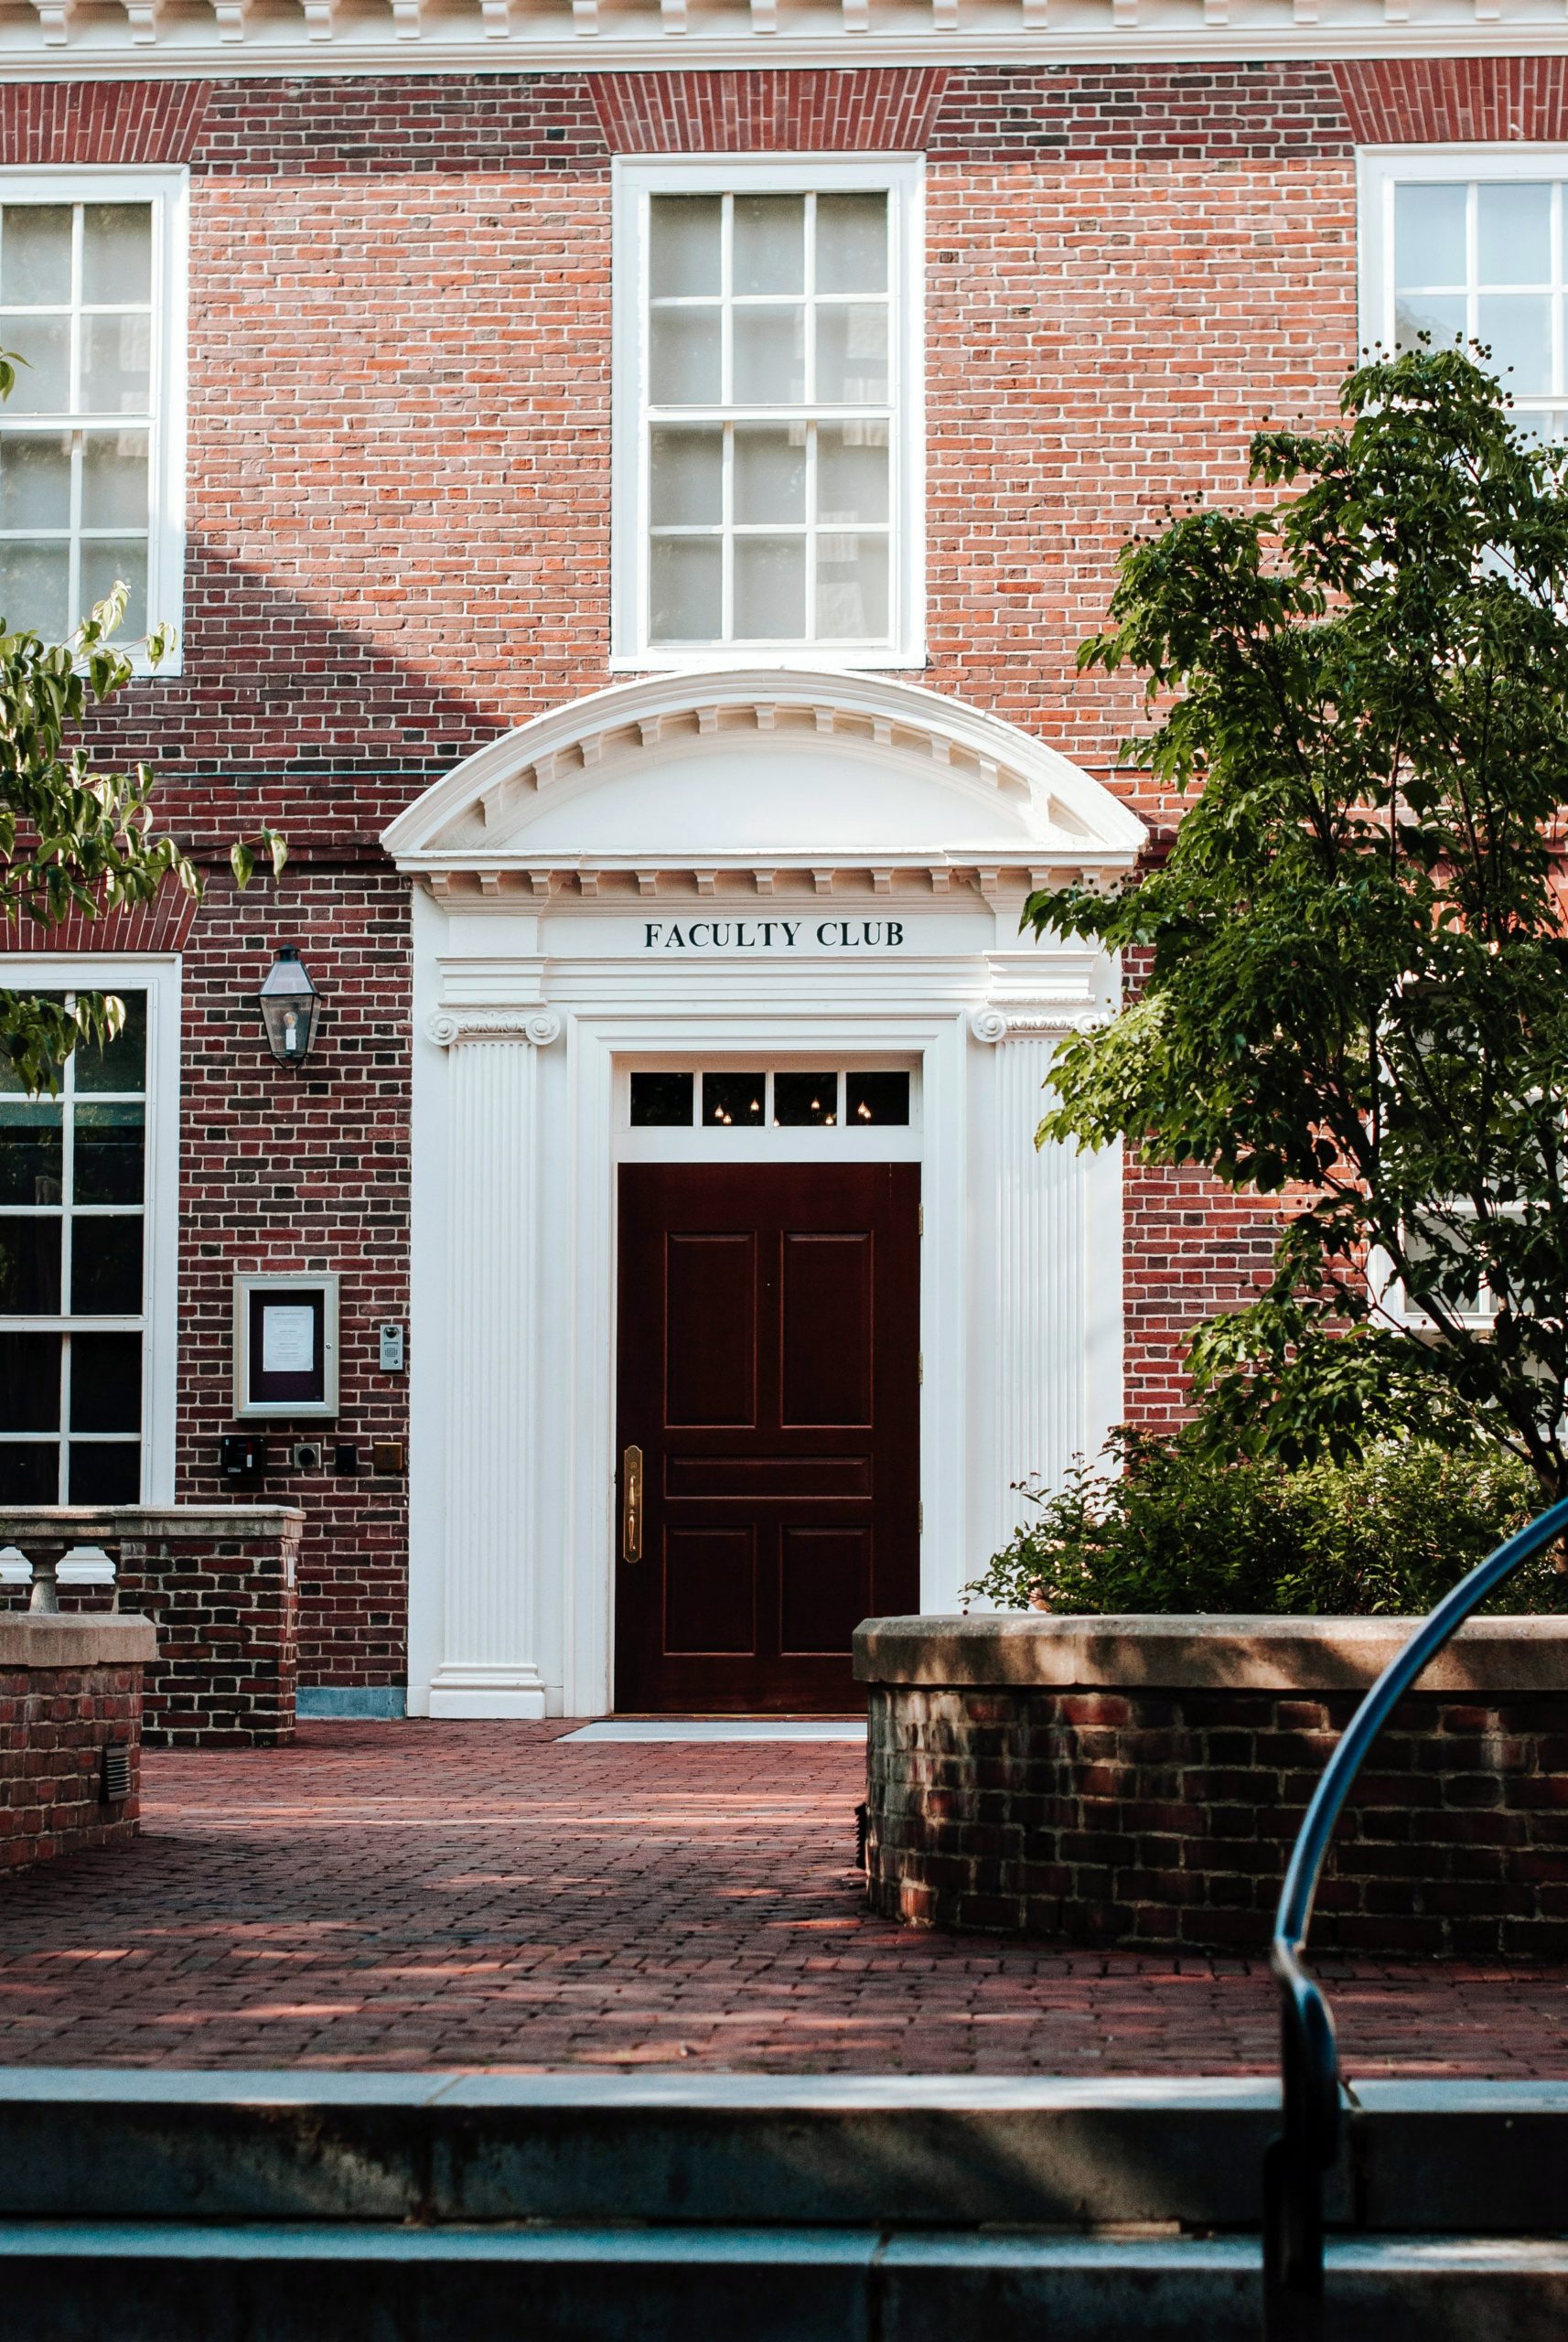 The Faculty Club entrance at Harvard